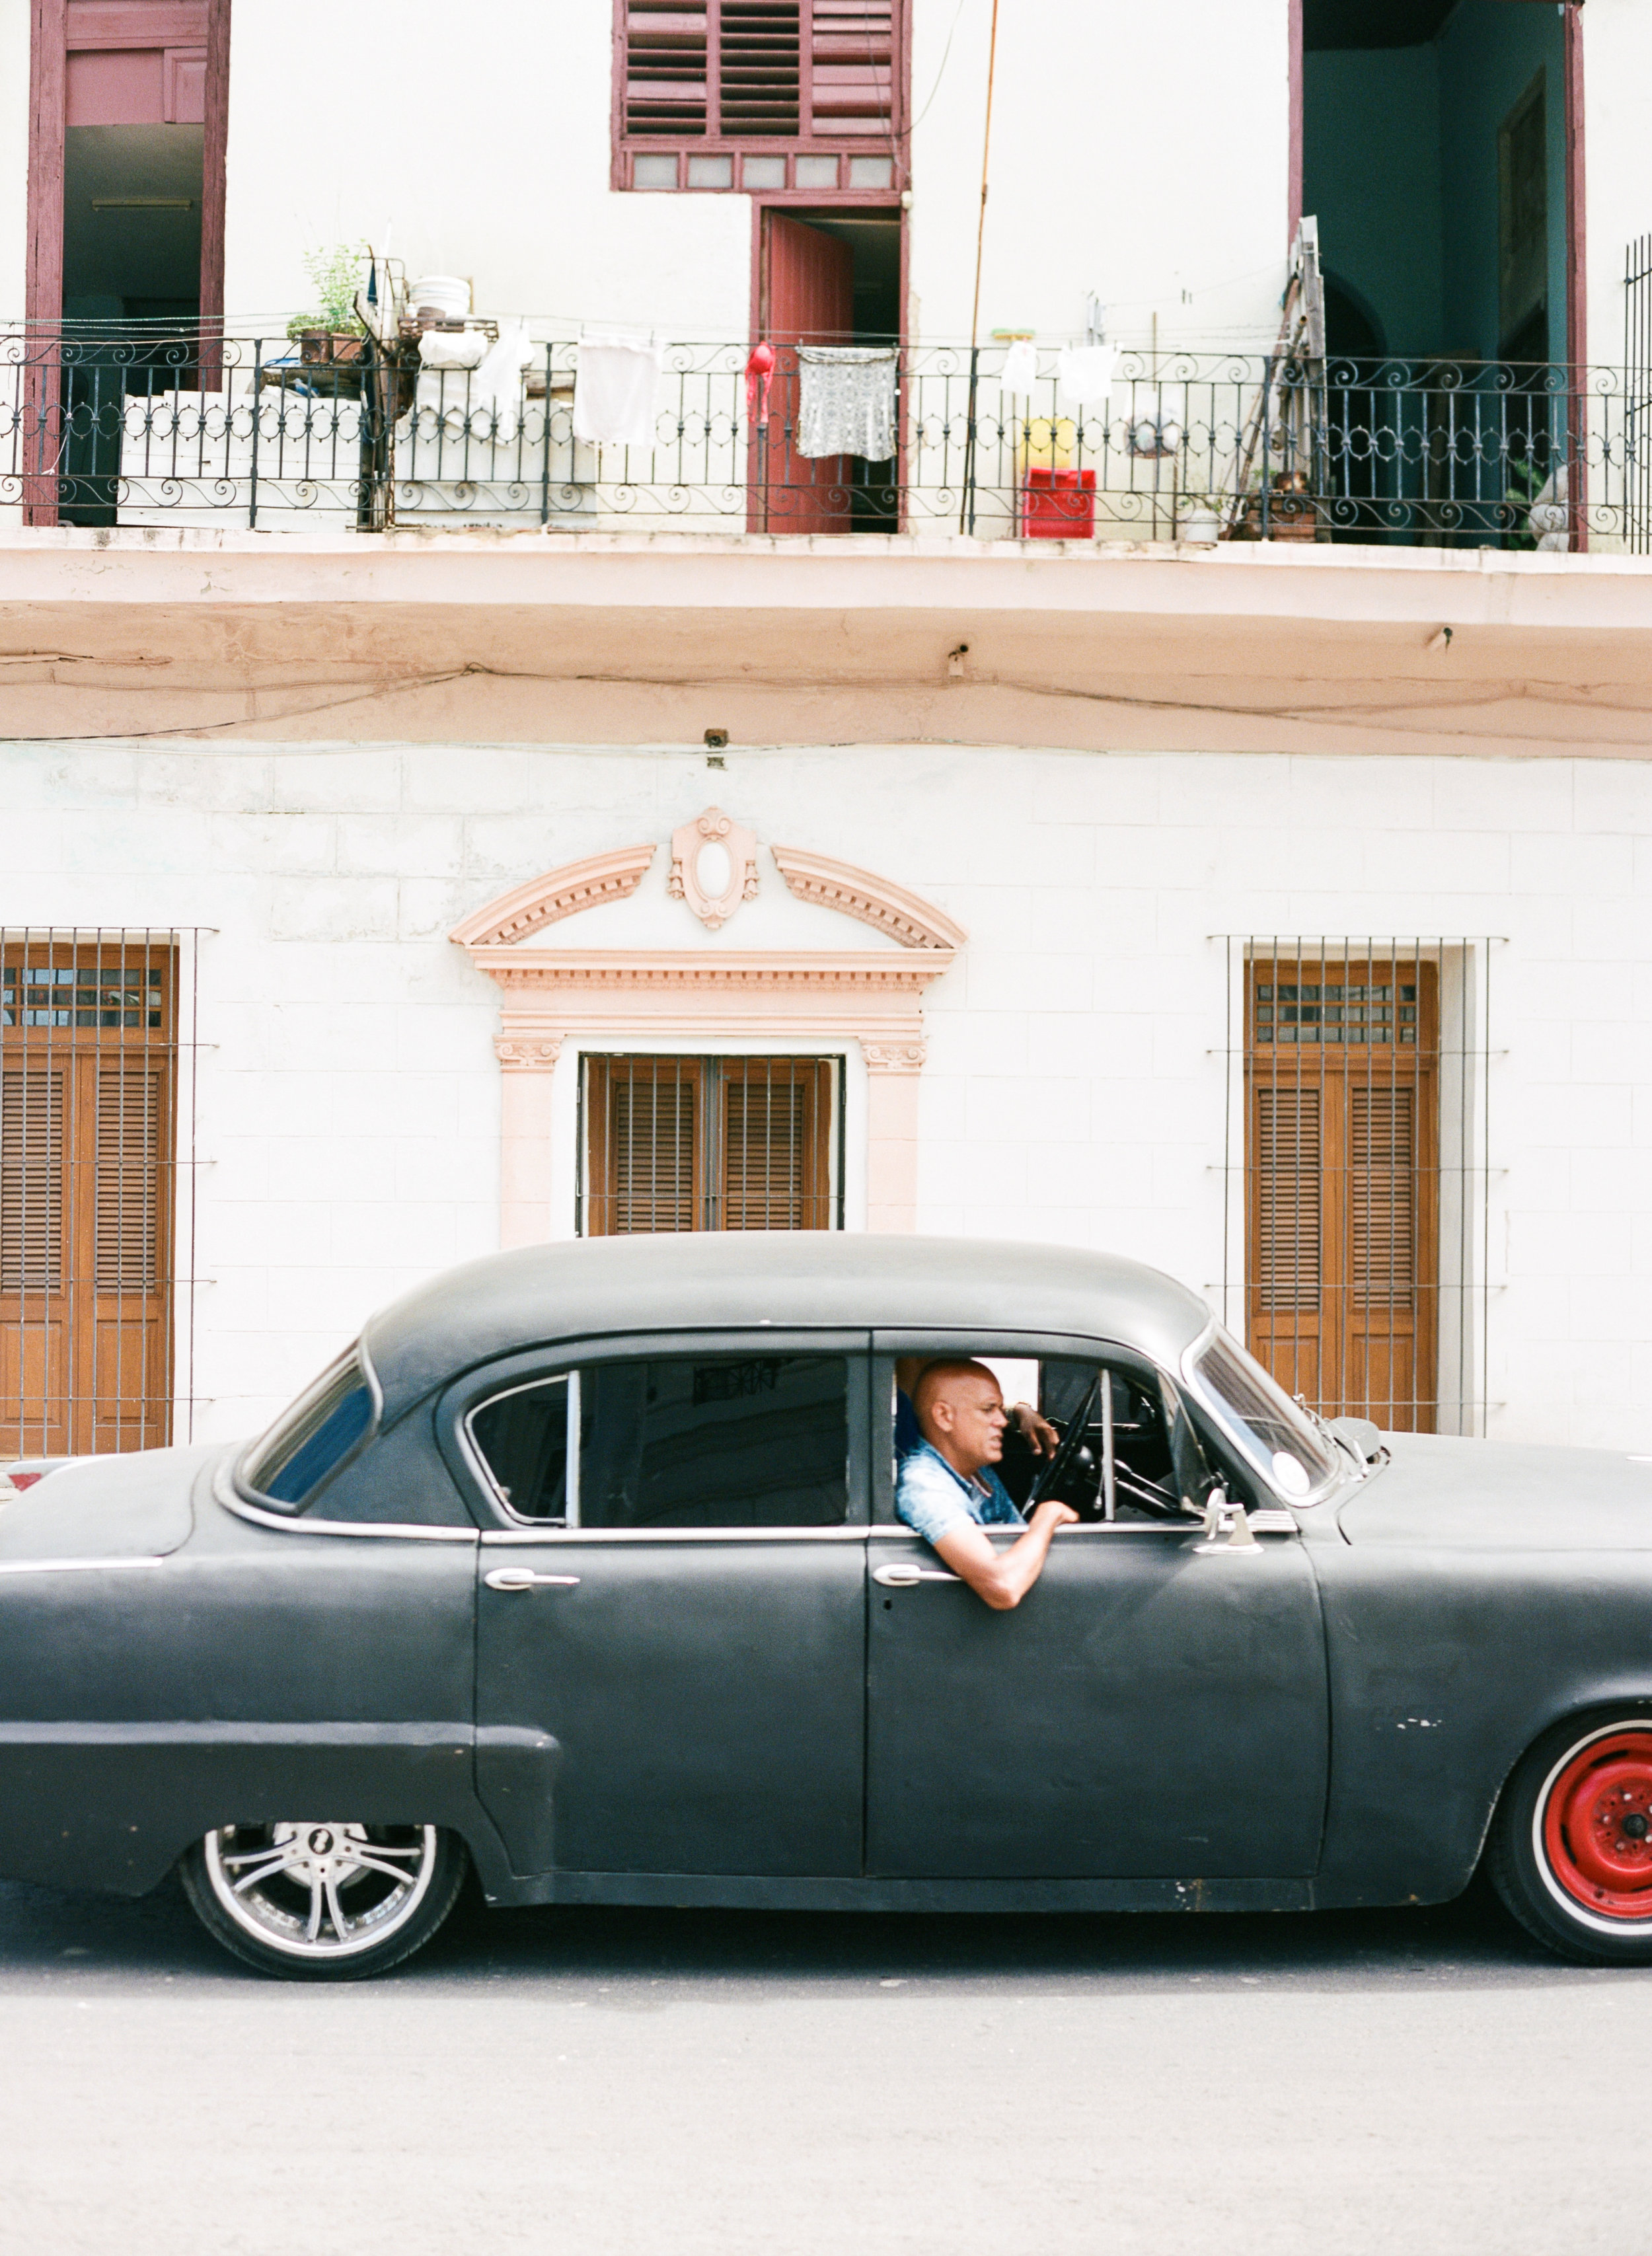 Cuba-Travel-photography-rachael-mcitnosh-photography-13.jpg